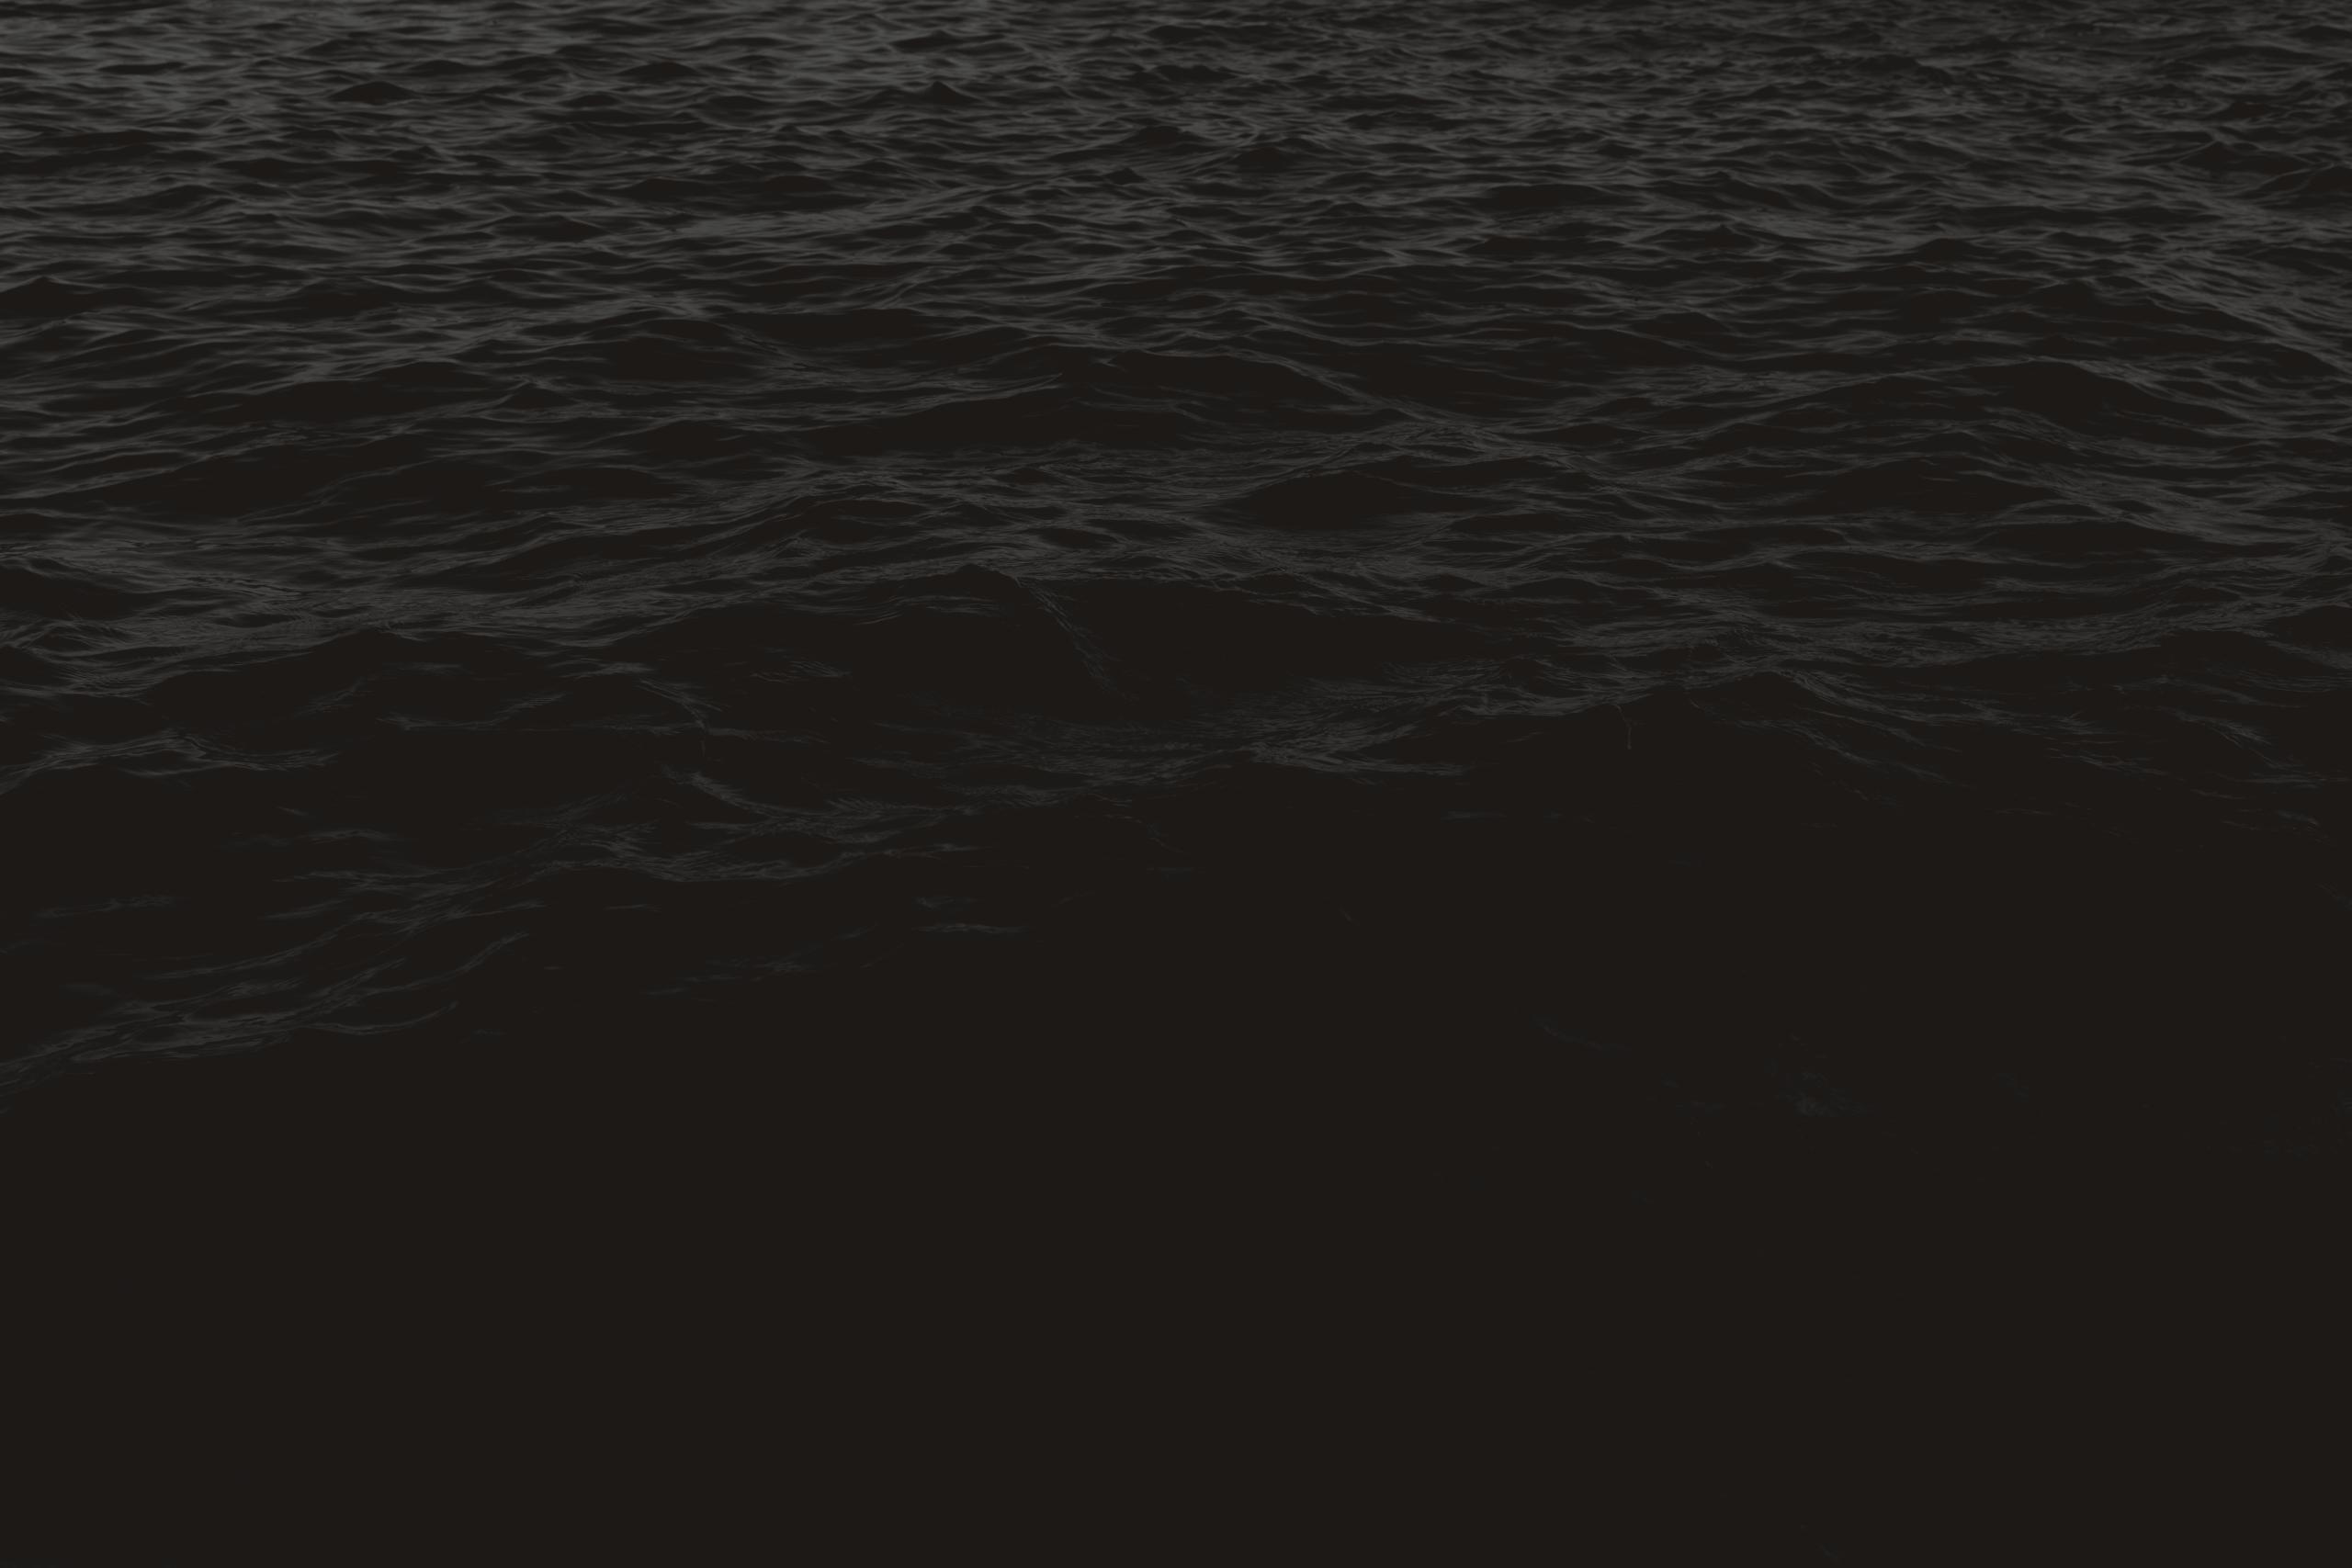 Dark sea water